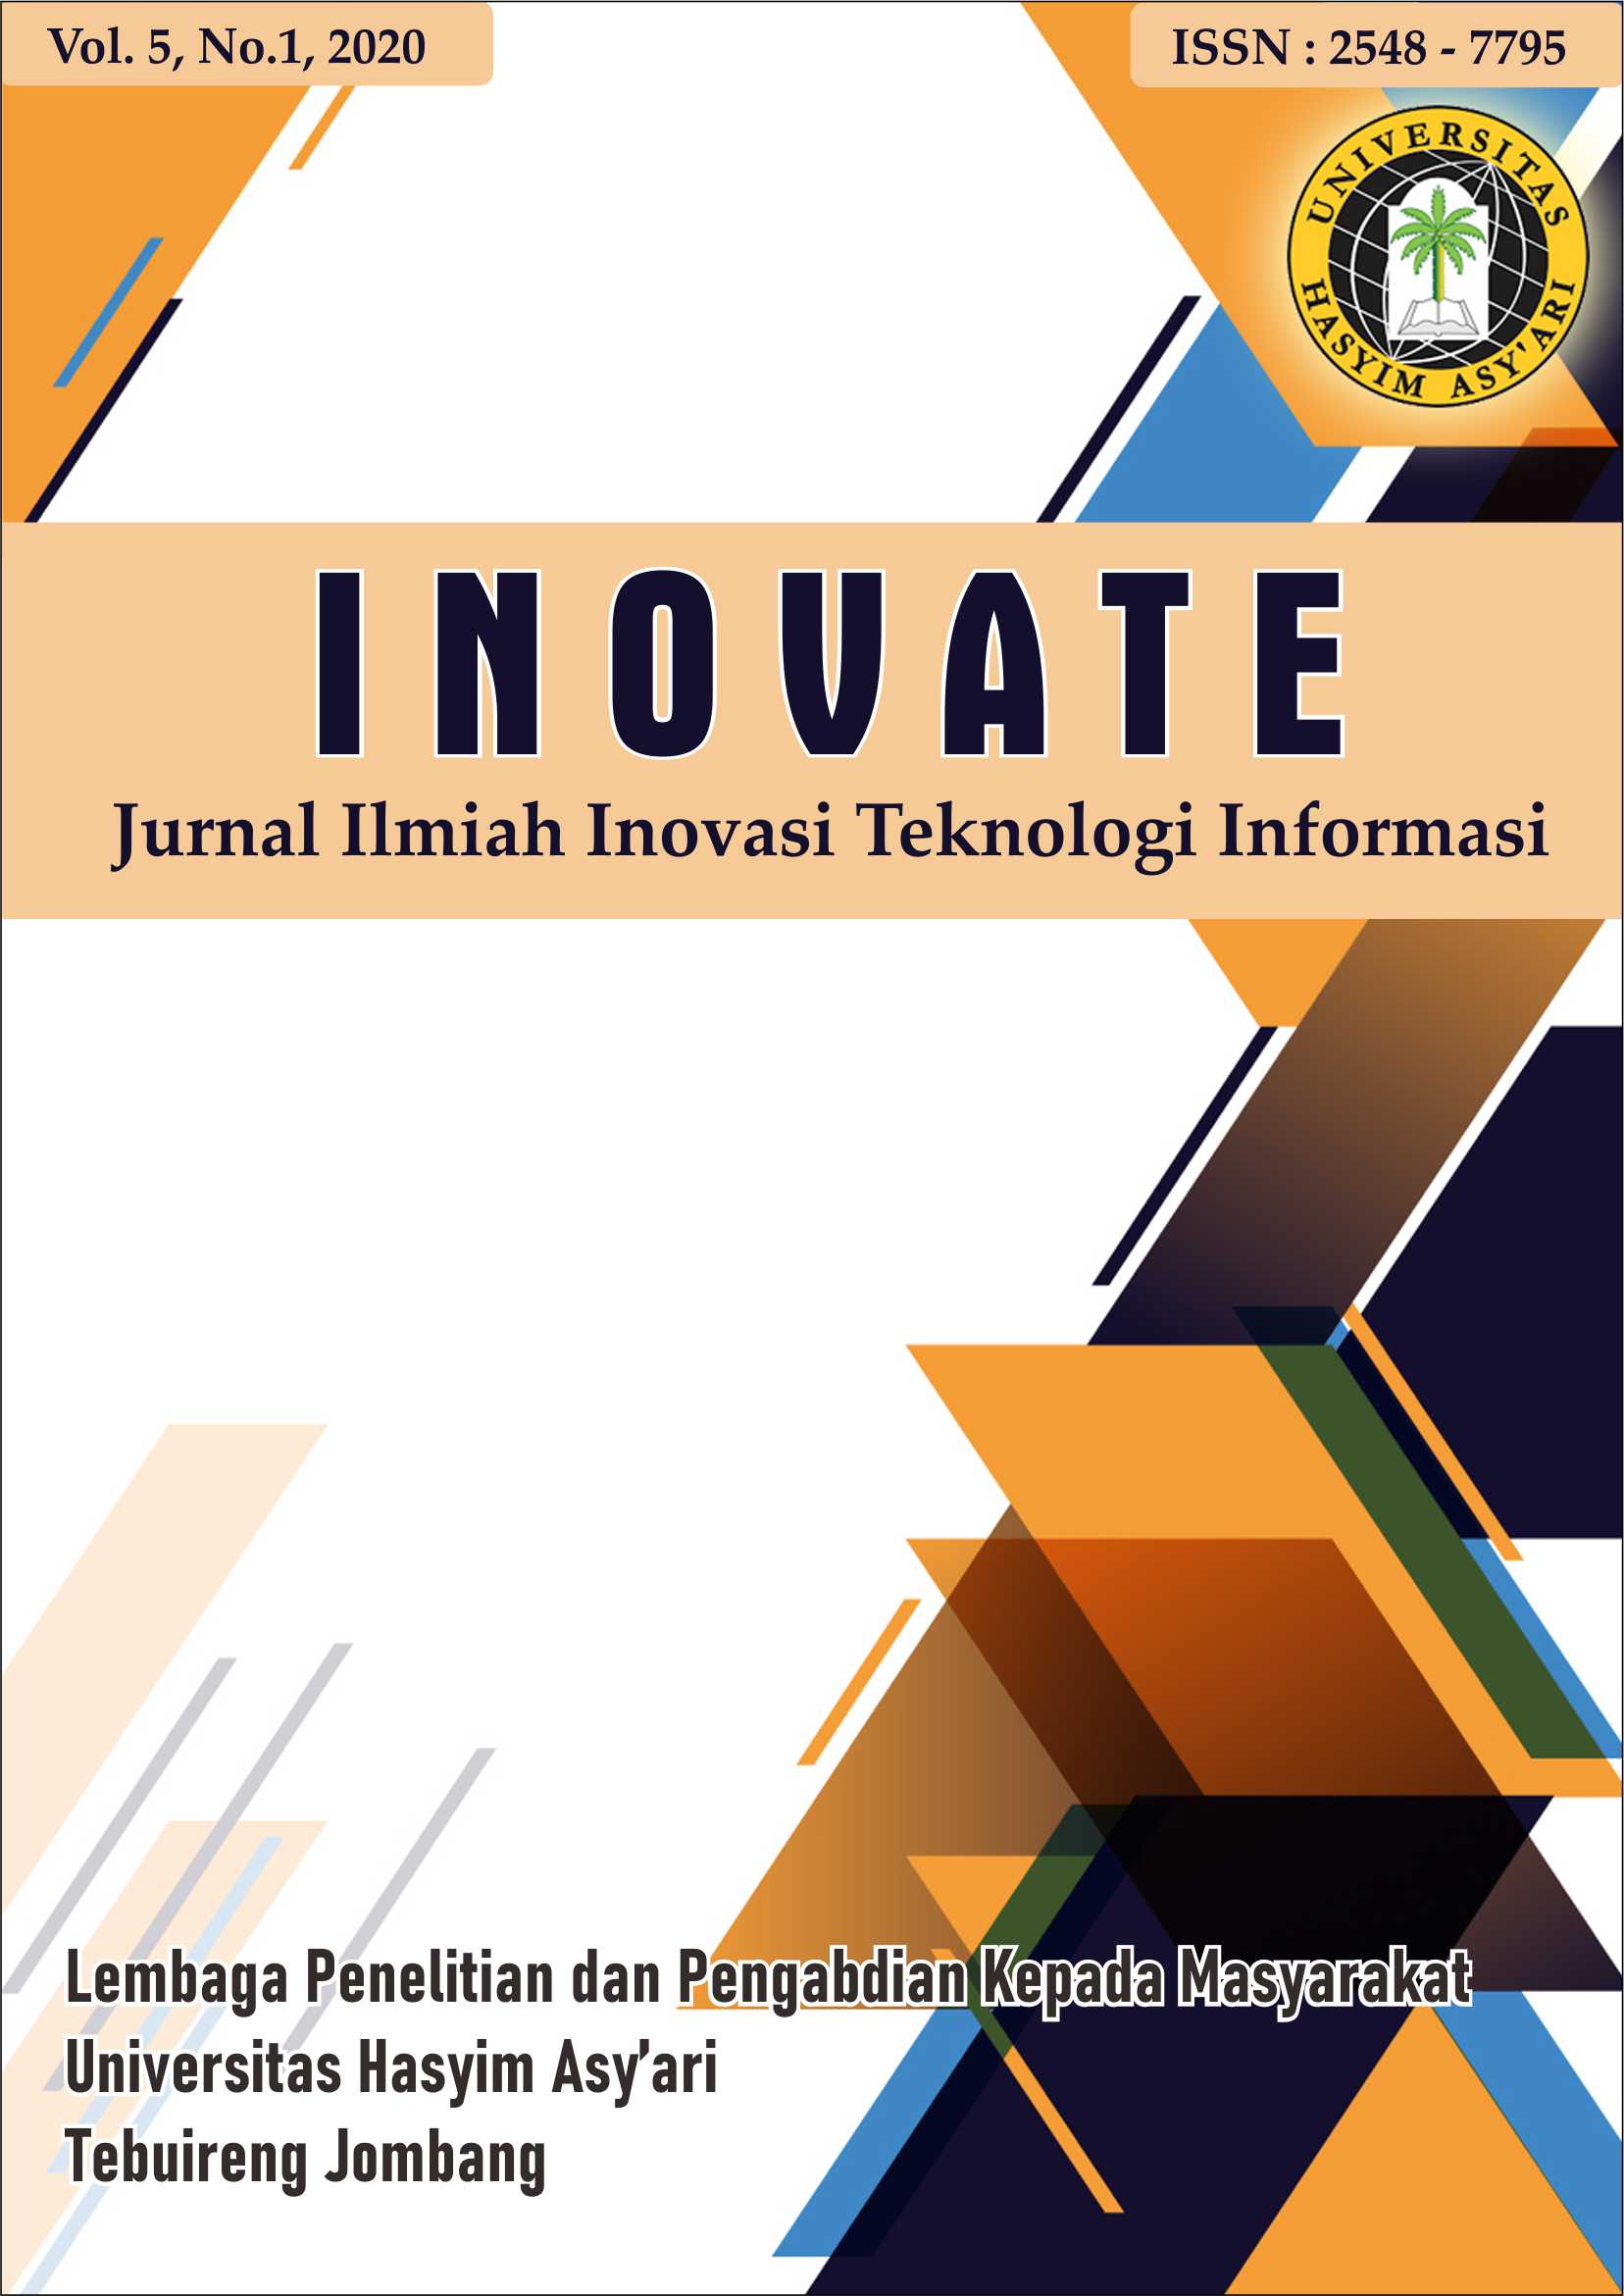 					Lihat Vol 5 No 1 (2020): Inovate Vol.05 No.1 Tahun 2020
				